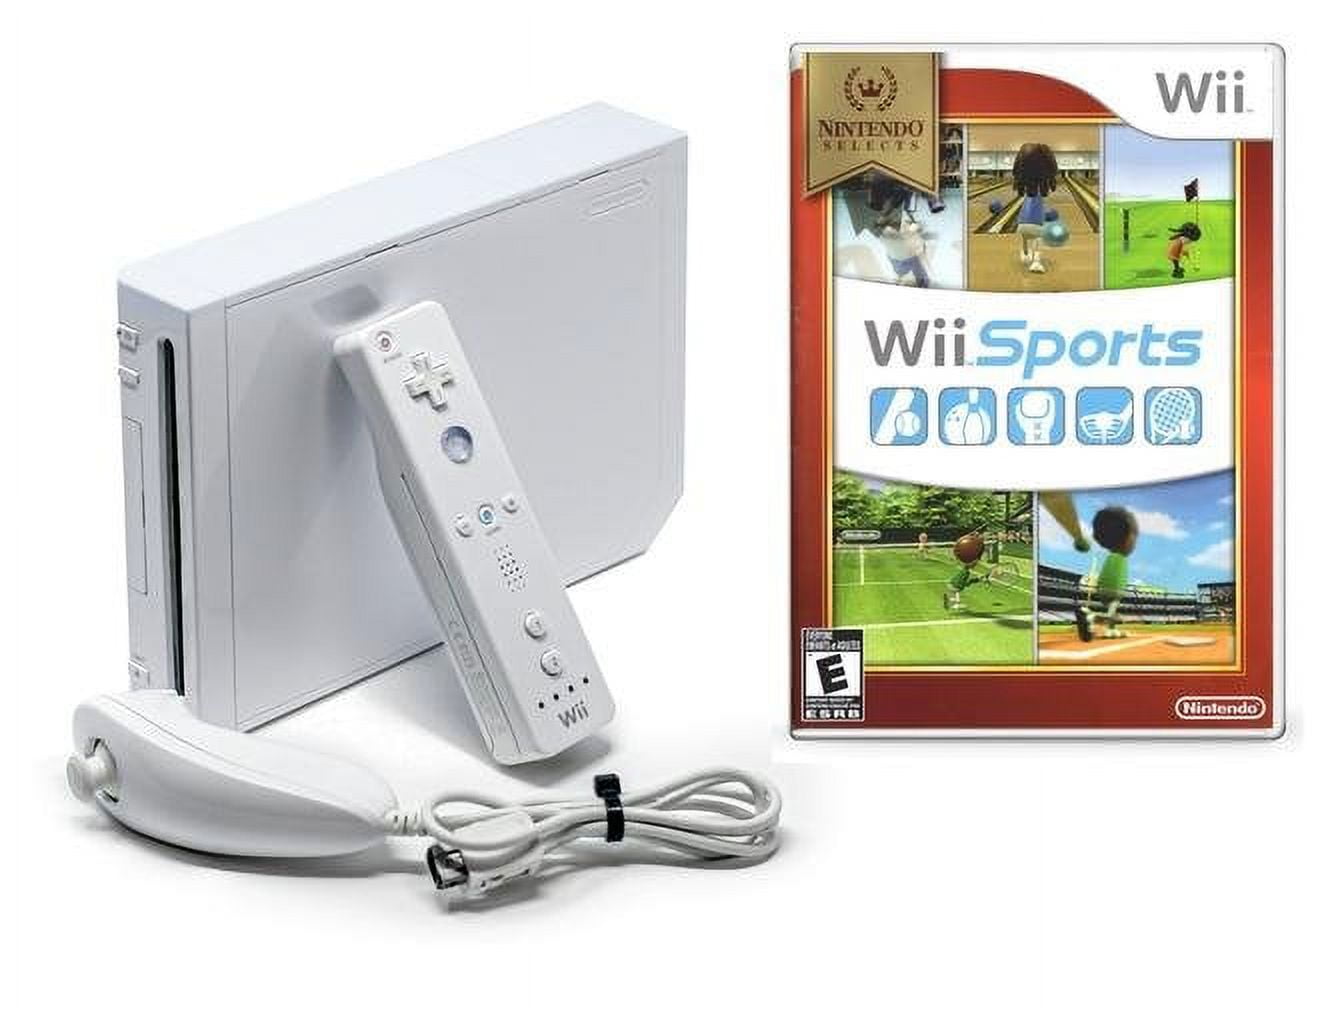 Nintendo Wii Consoles